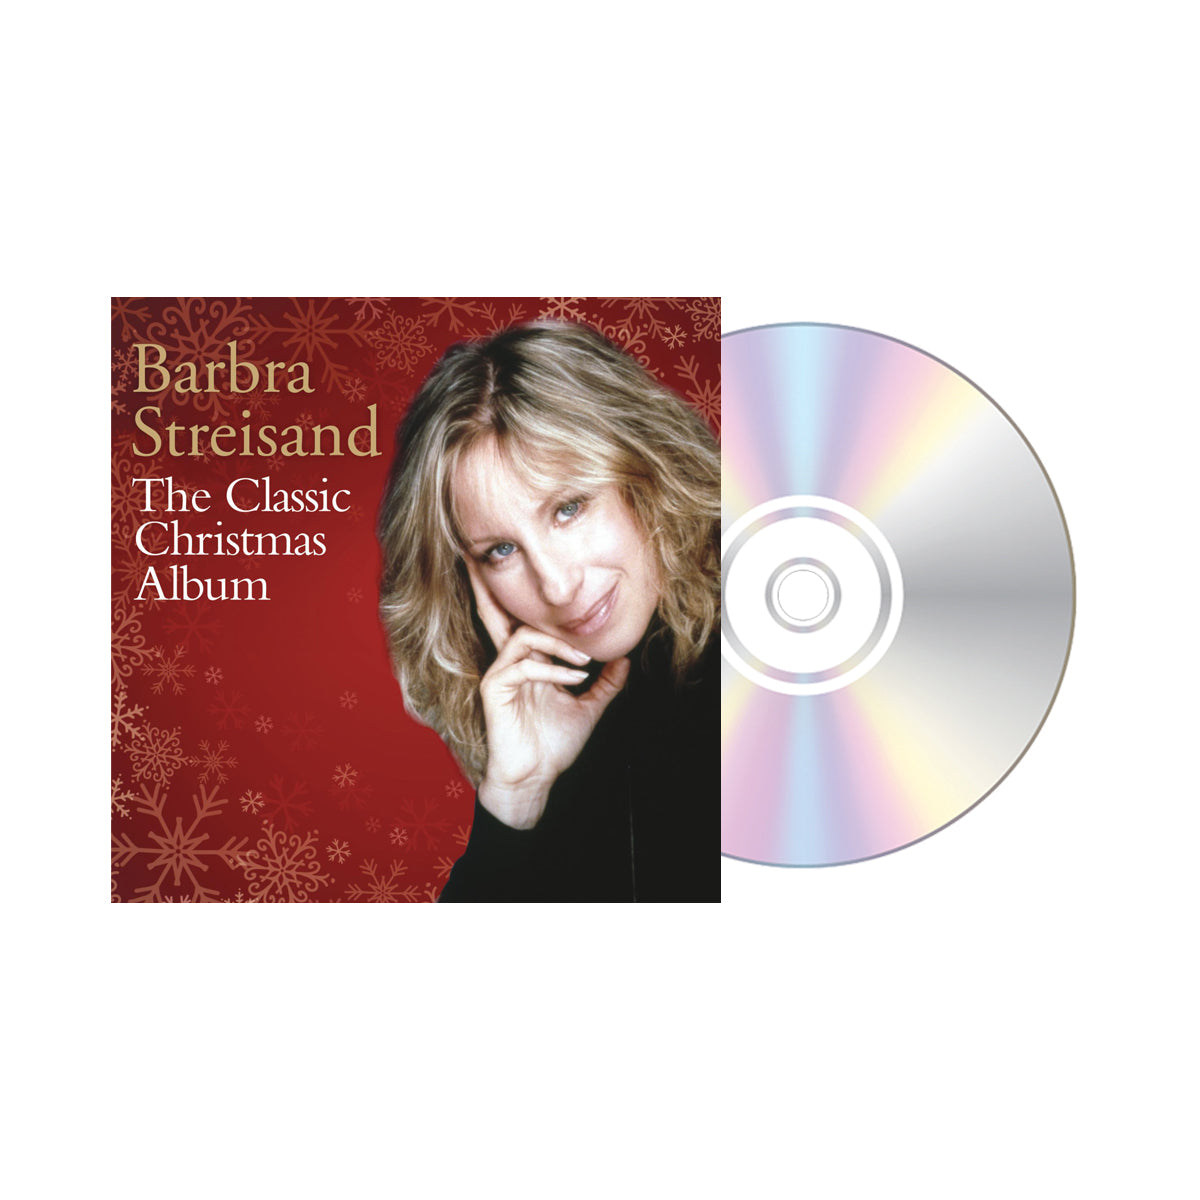 BARBRA STREISAND - THE CLASSIC CHRISTMAS ALBUM CD